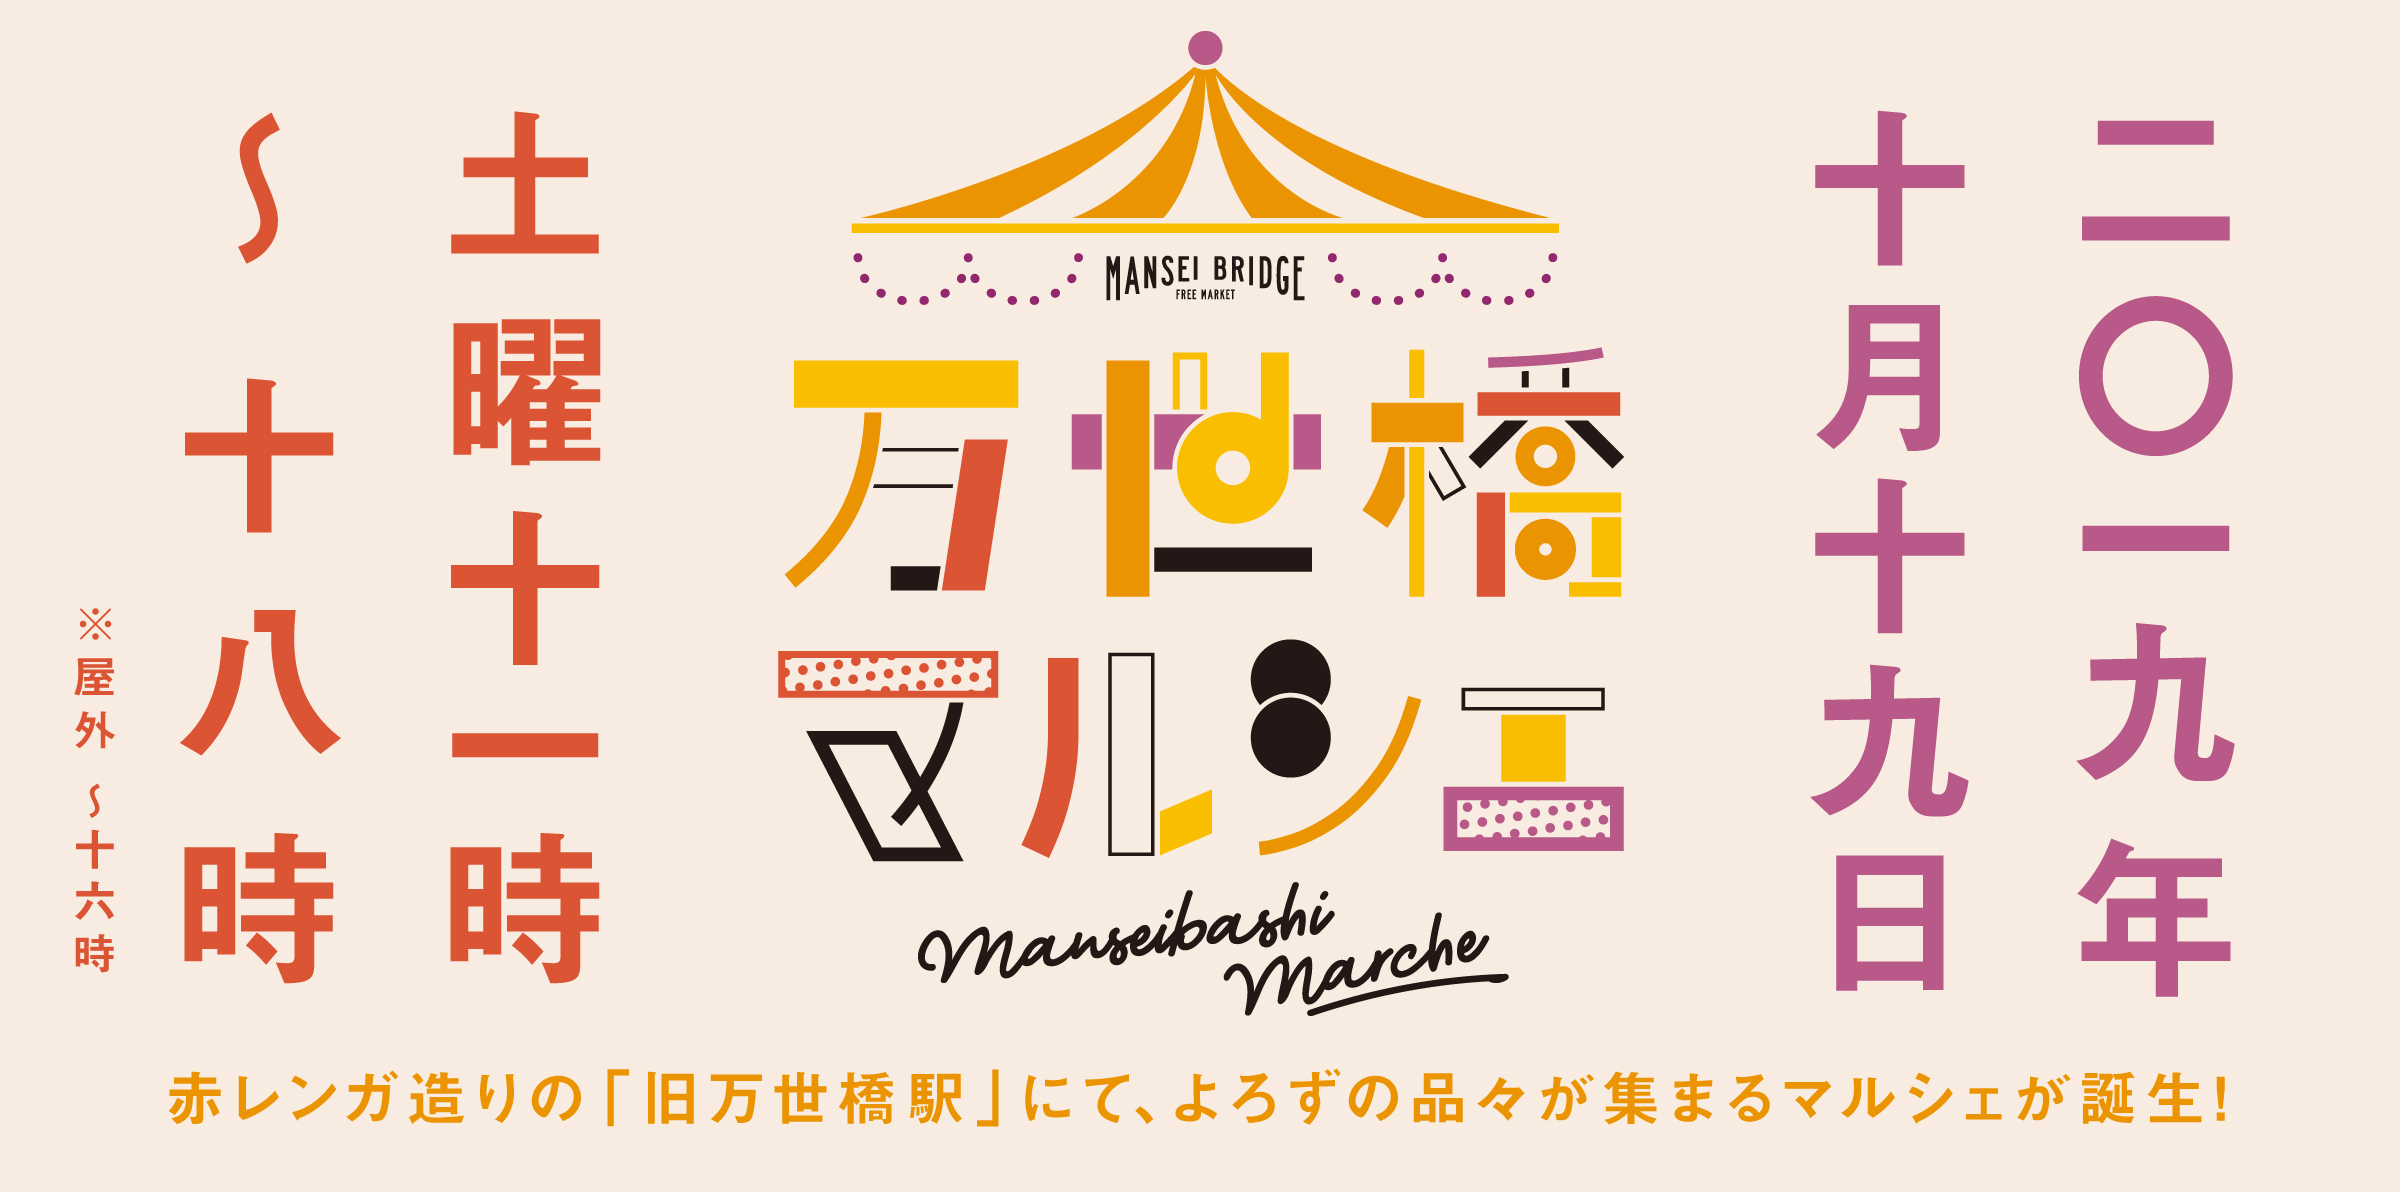 Manseibashi marche consumer hp 10